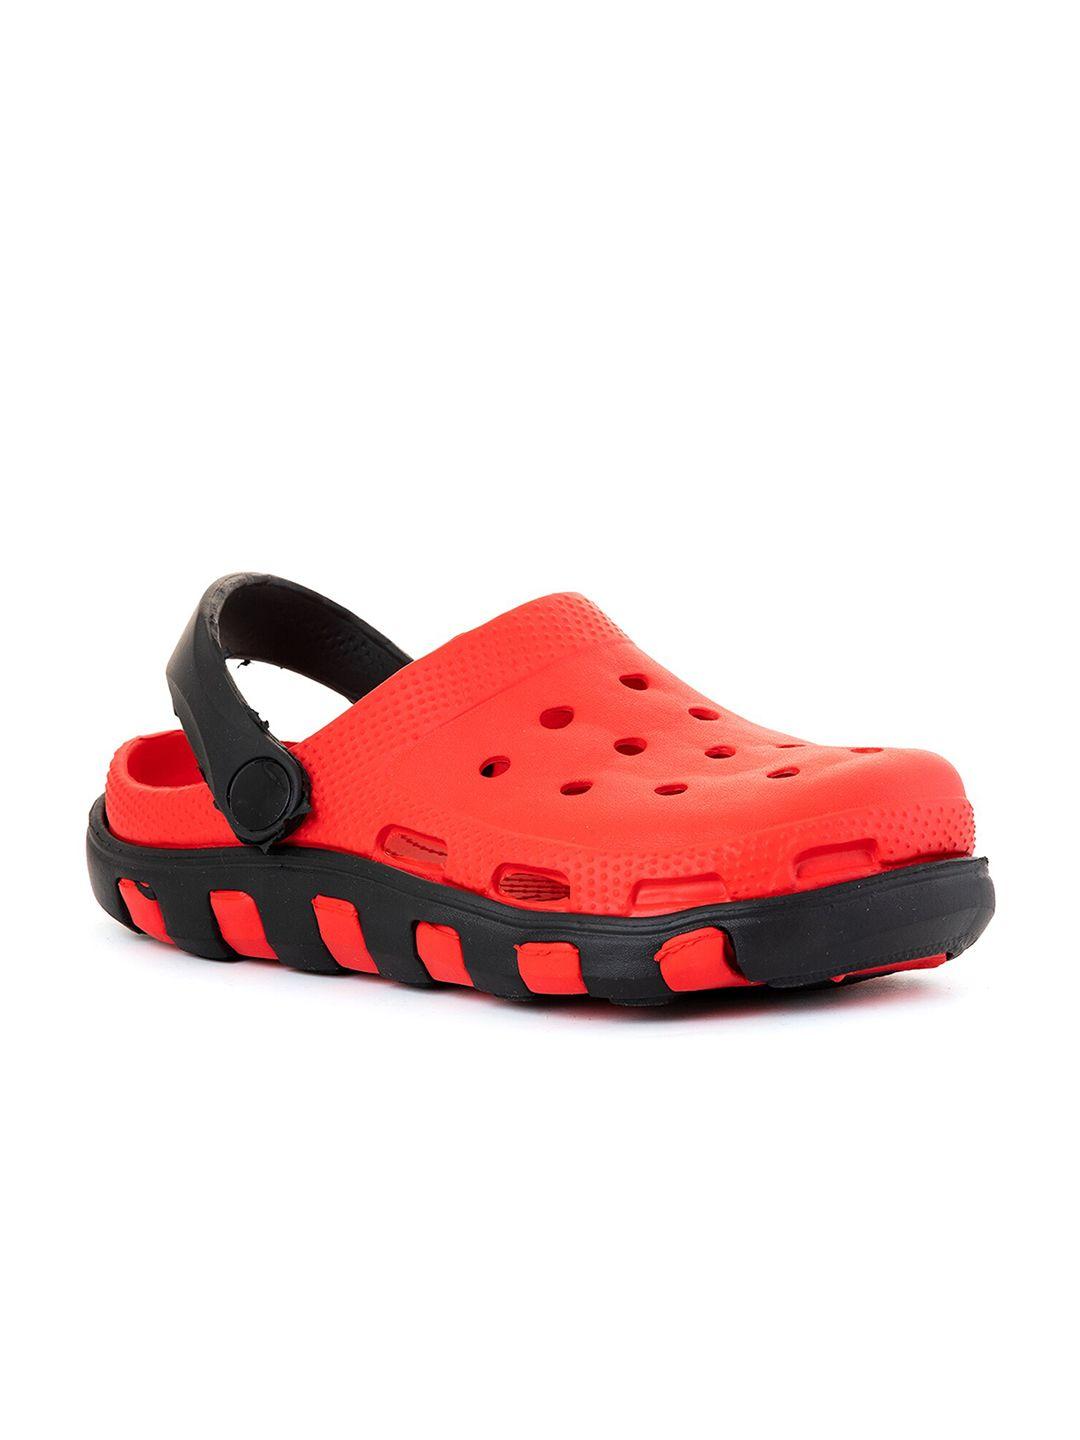 khadims-boys-red-&-black-clogs-sandals